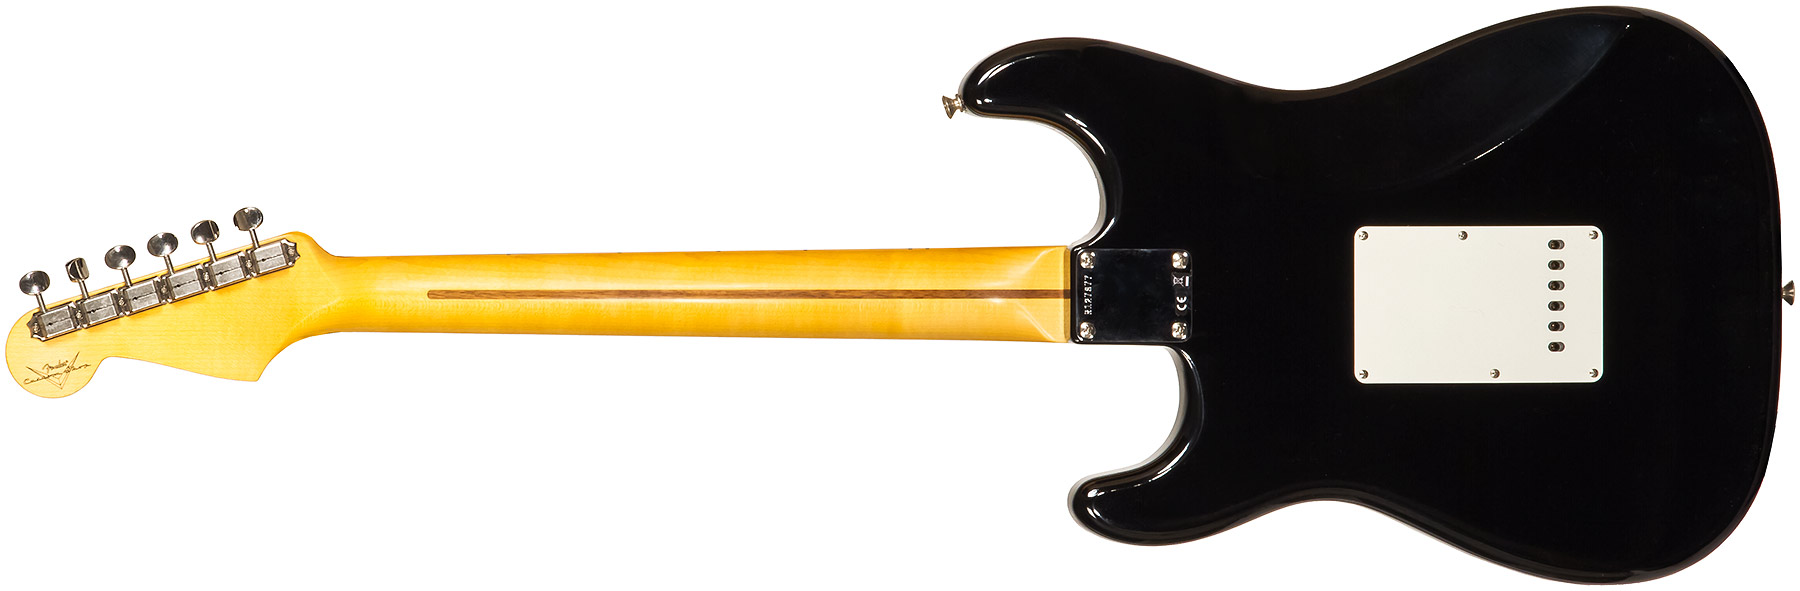 Fender Custom Shop Strat 1955 3s Trem Mn #r127877 - Closet Classic Black - Guitarra eléctrica con forma de str. - Variation 1